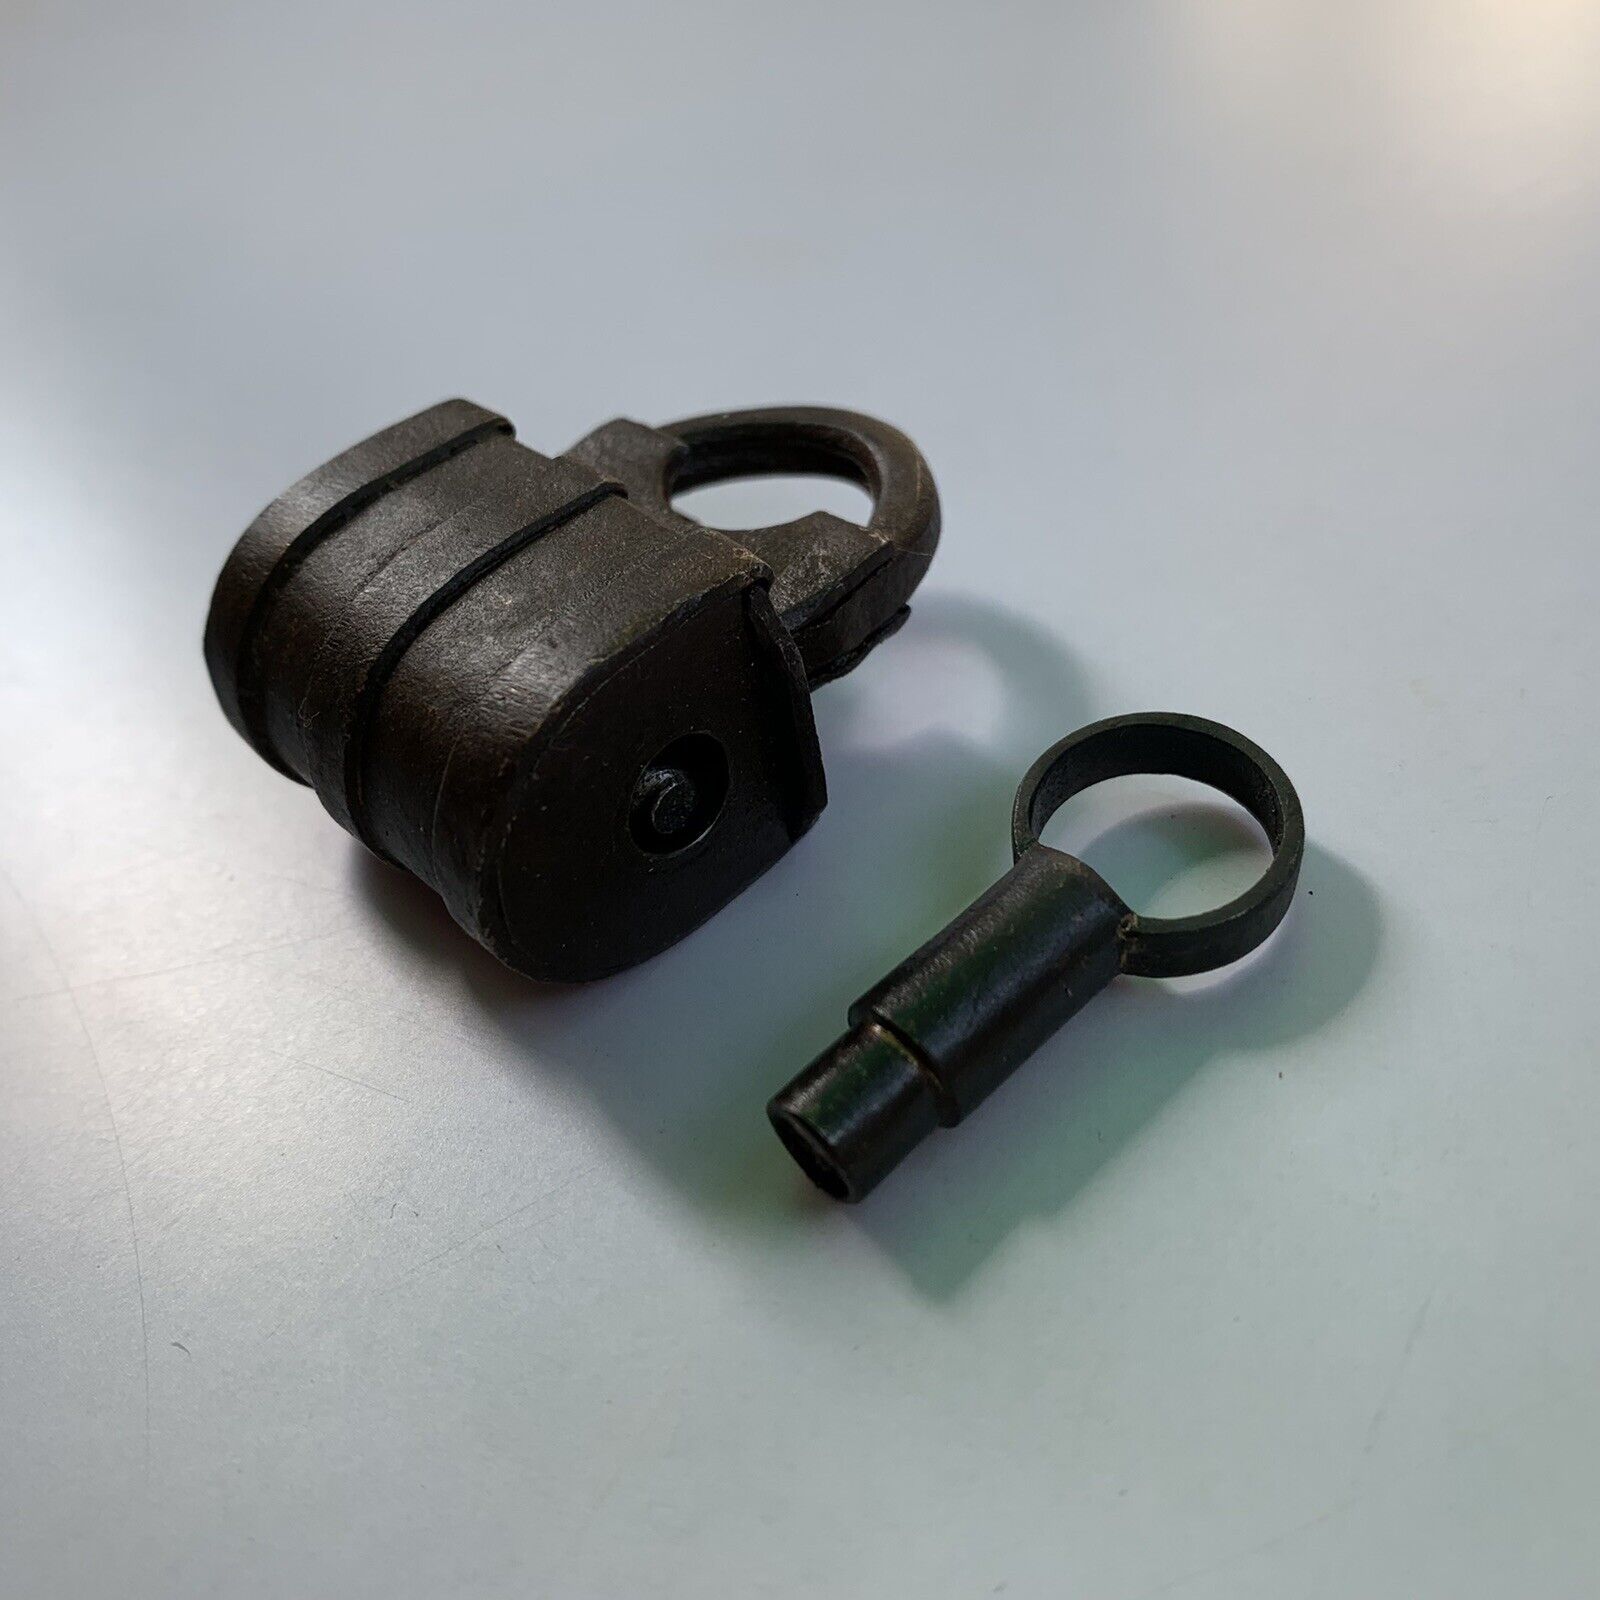 1850's Iron padlock or lock with SCREW TYPE nice decorative shape, small sized.